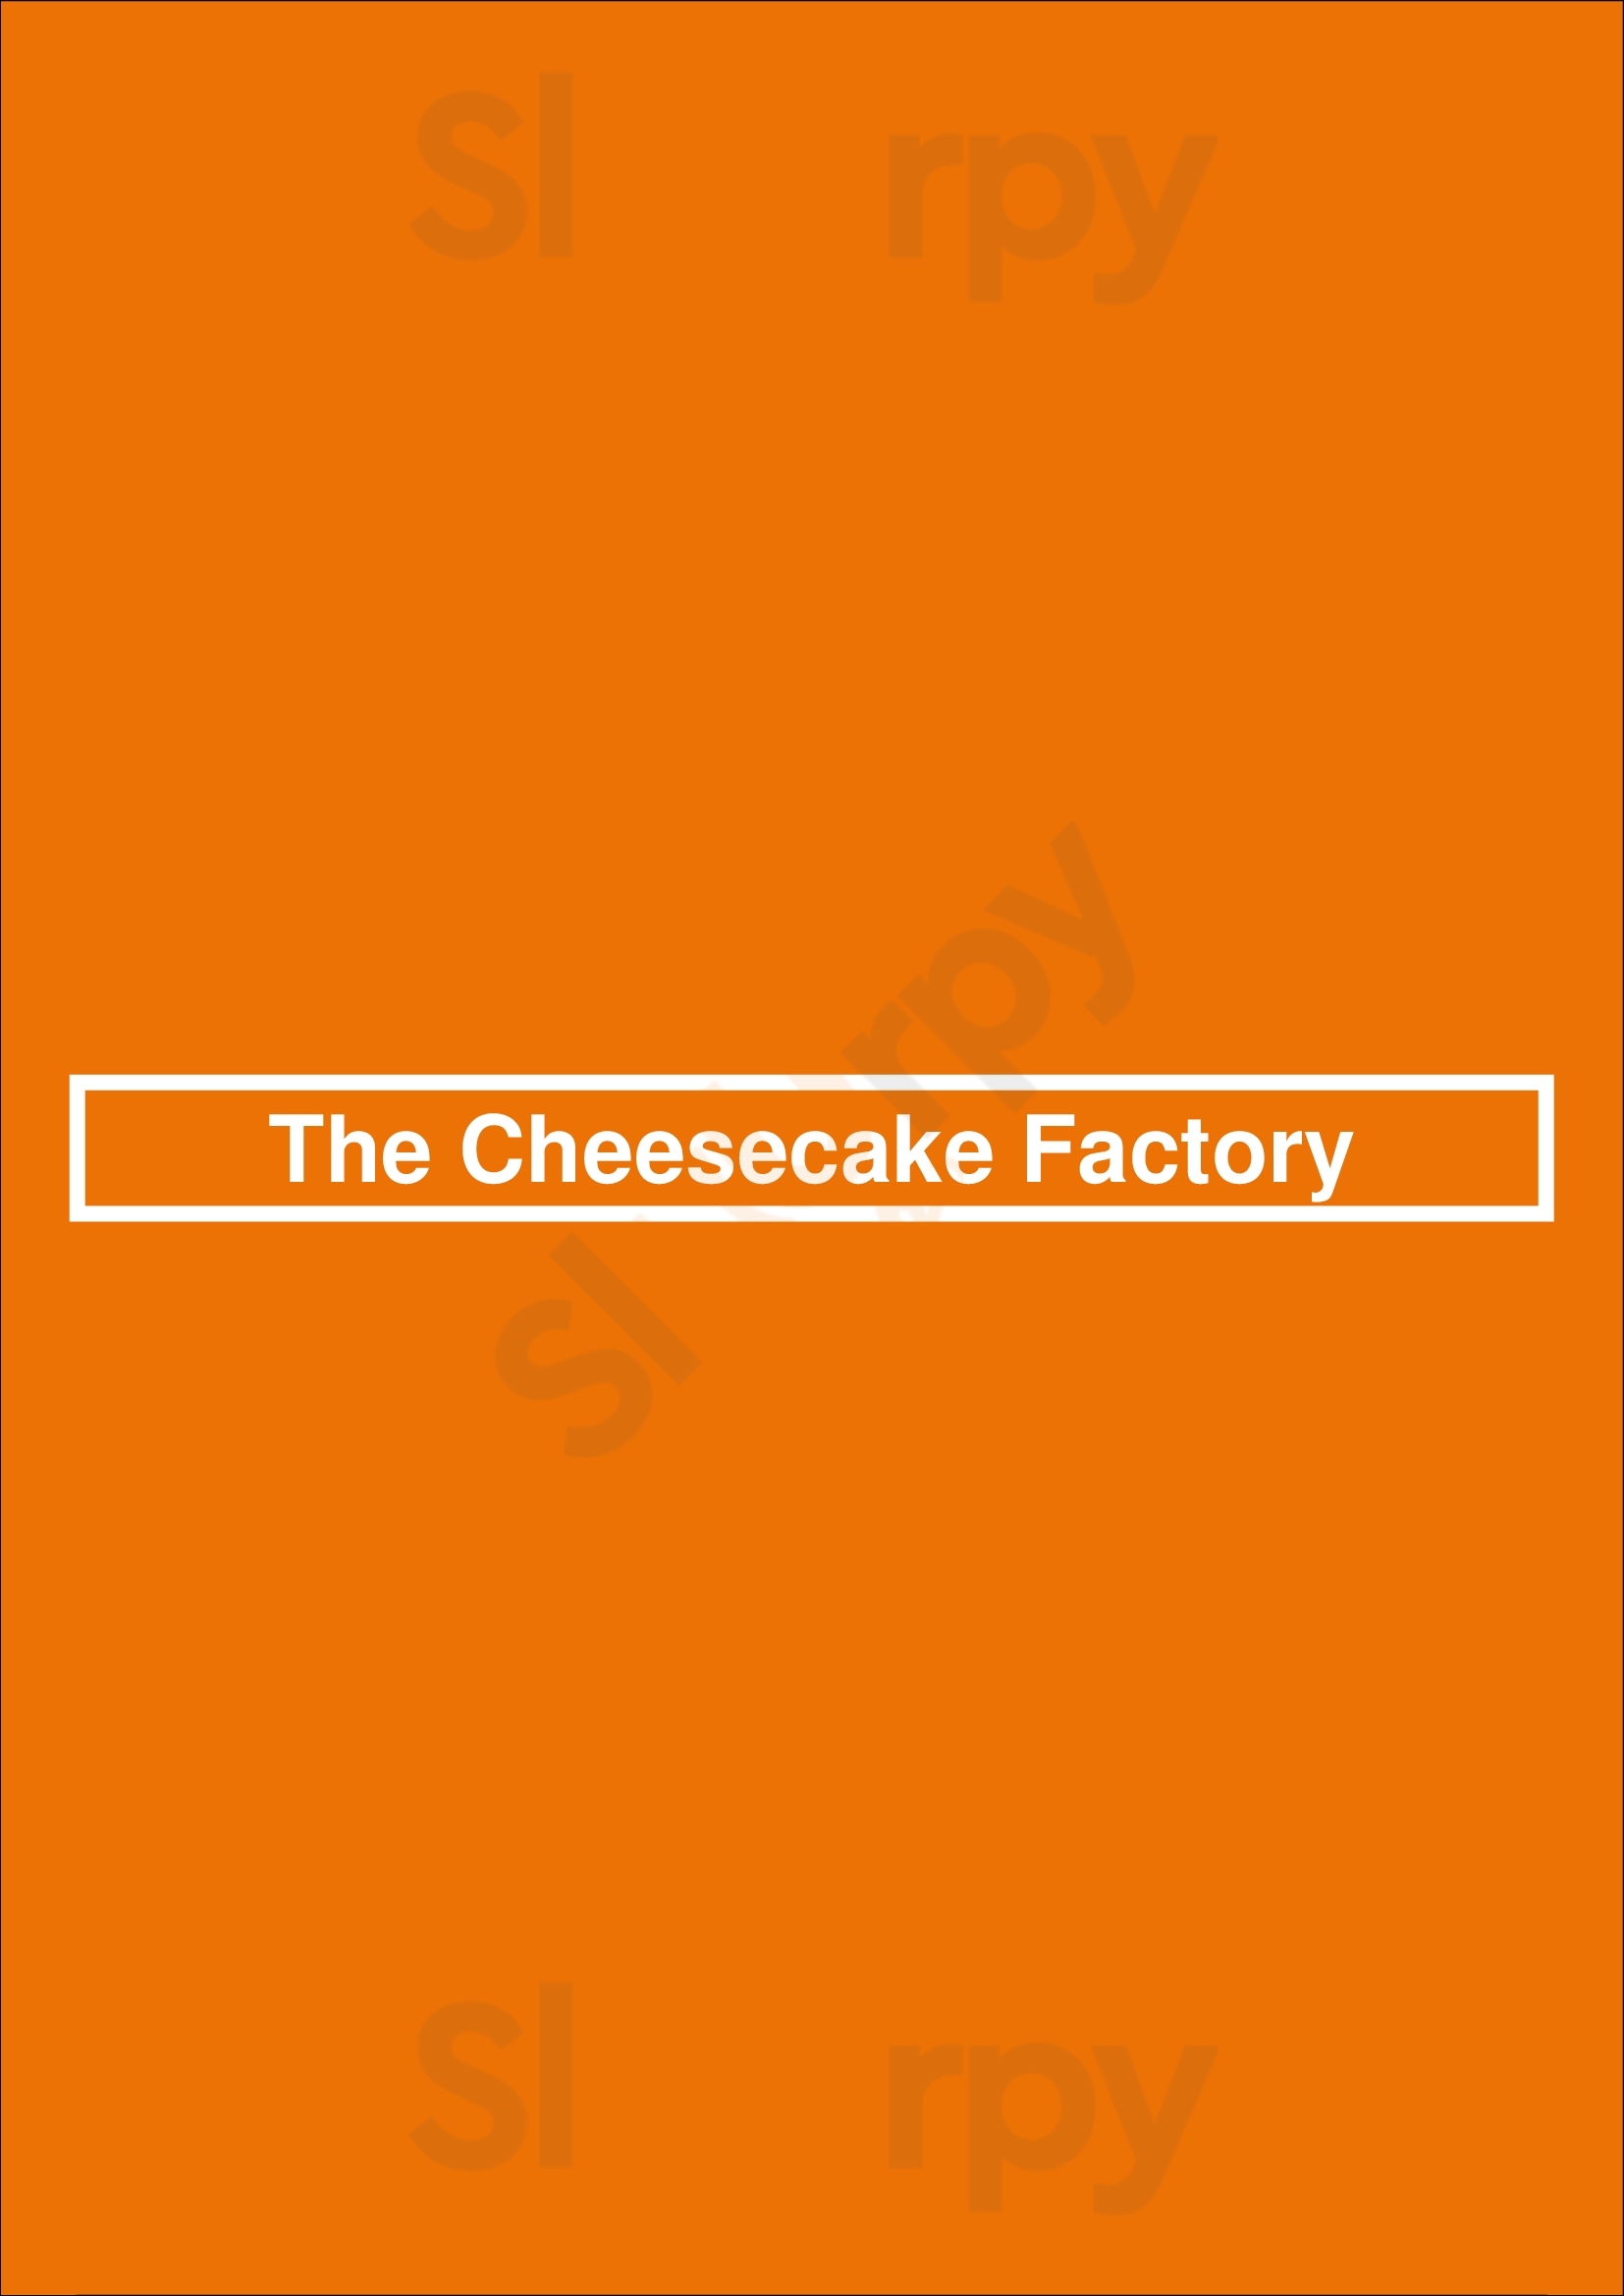 The Cheesecake Factory Tucson Menu - 1